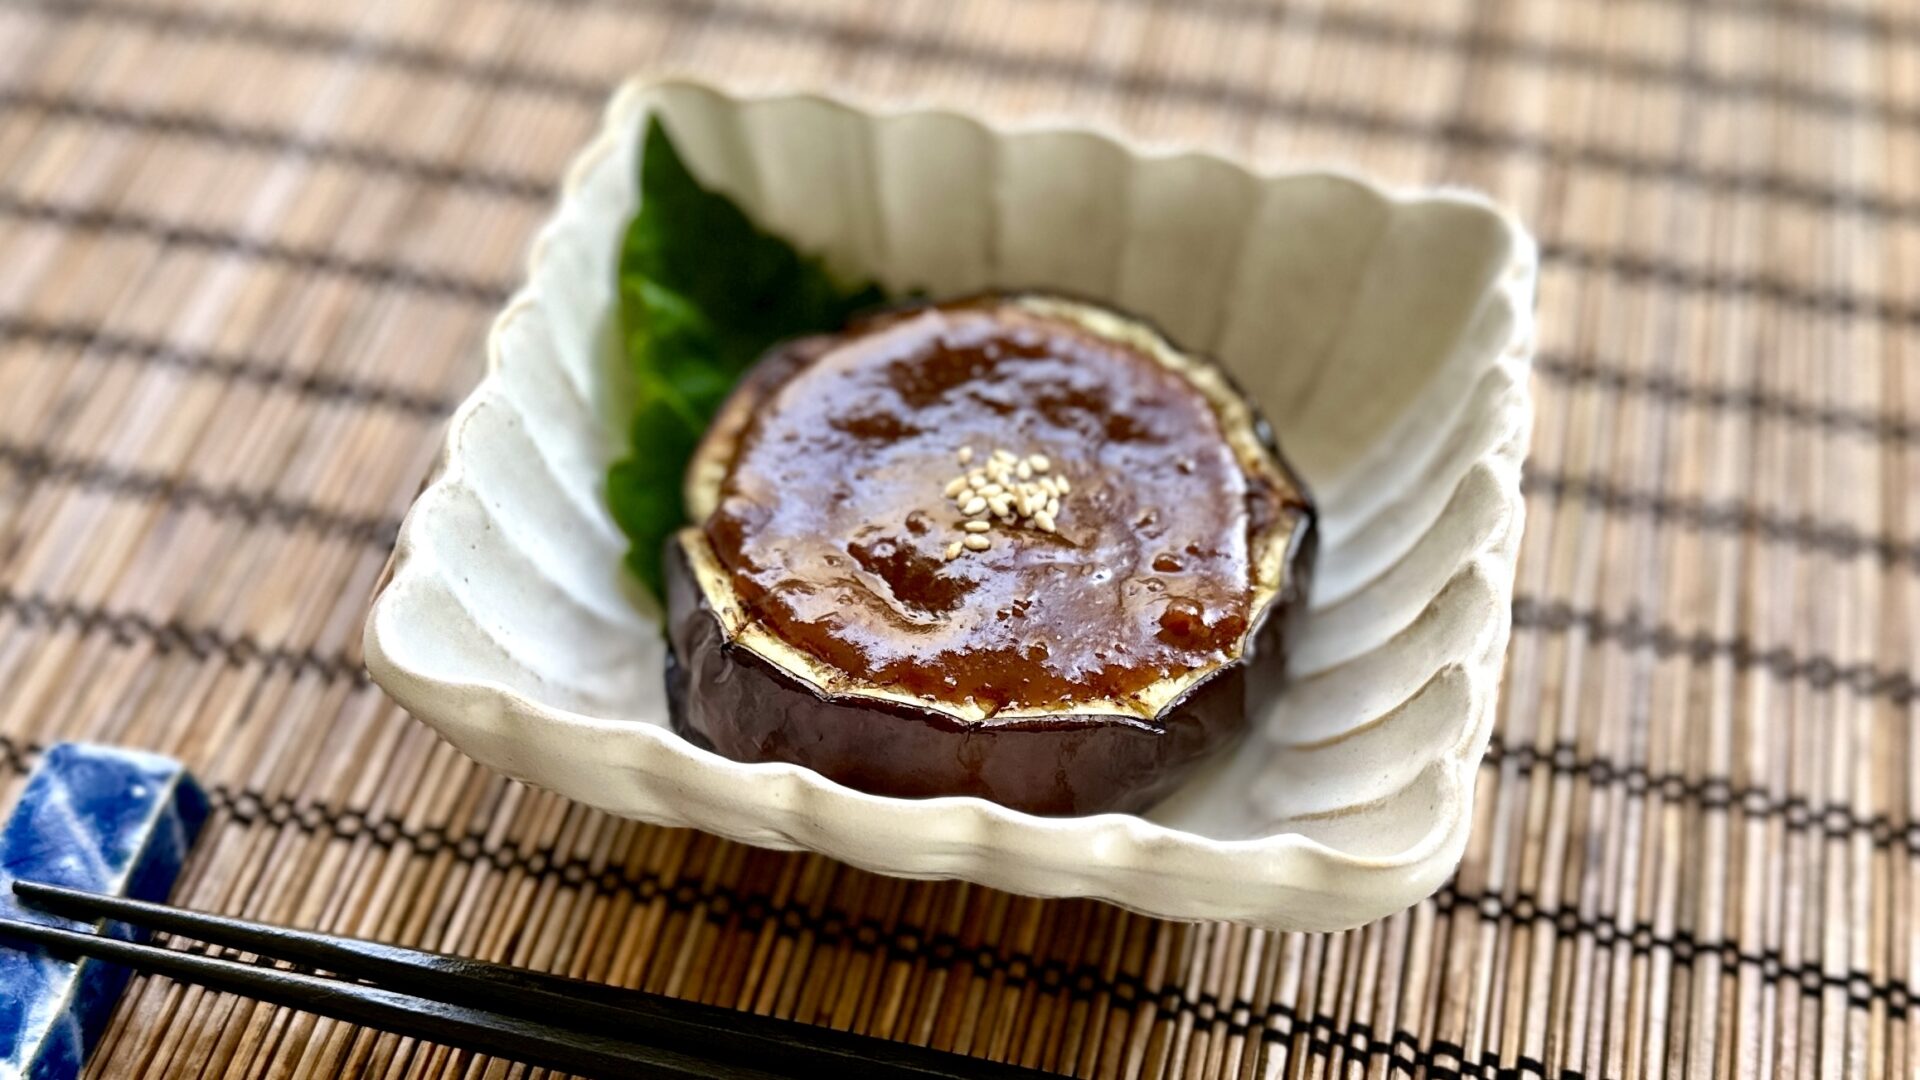 Nori Tsukudani Recipe – Japanese Cooking 101